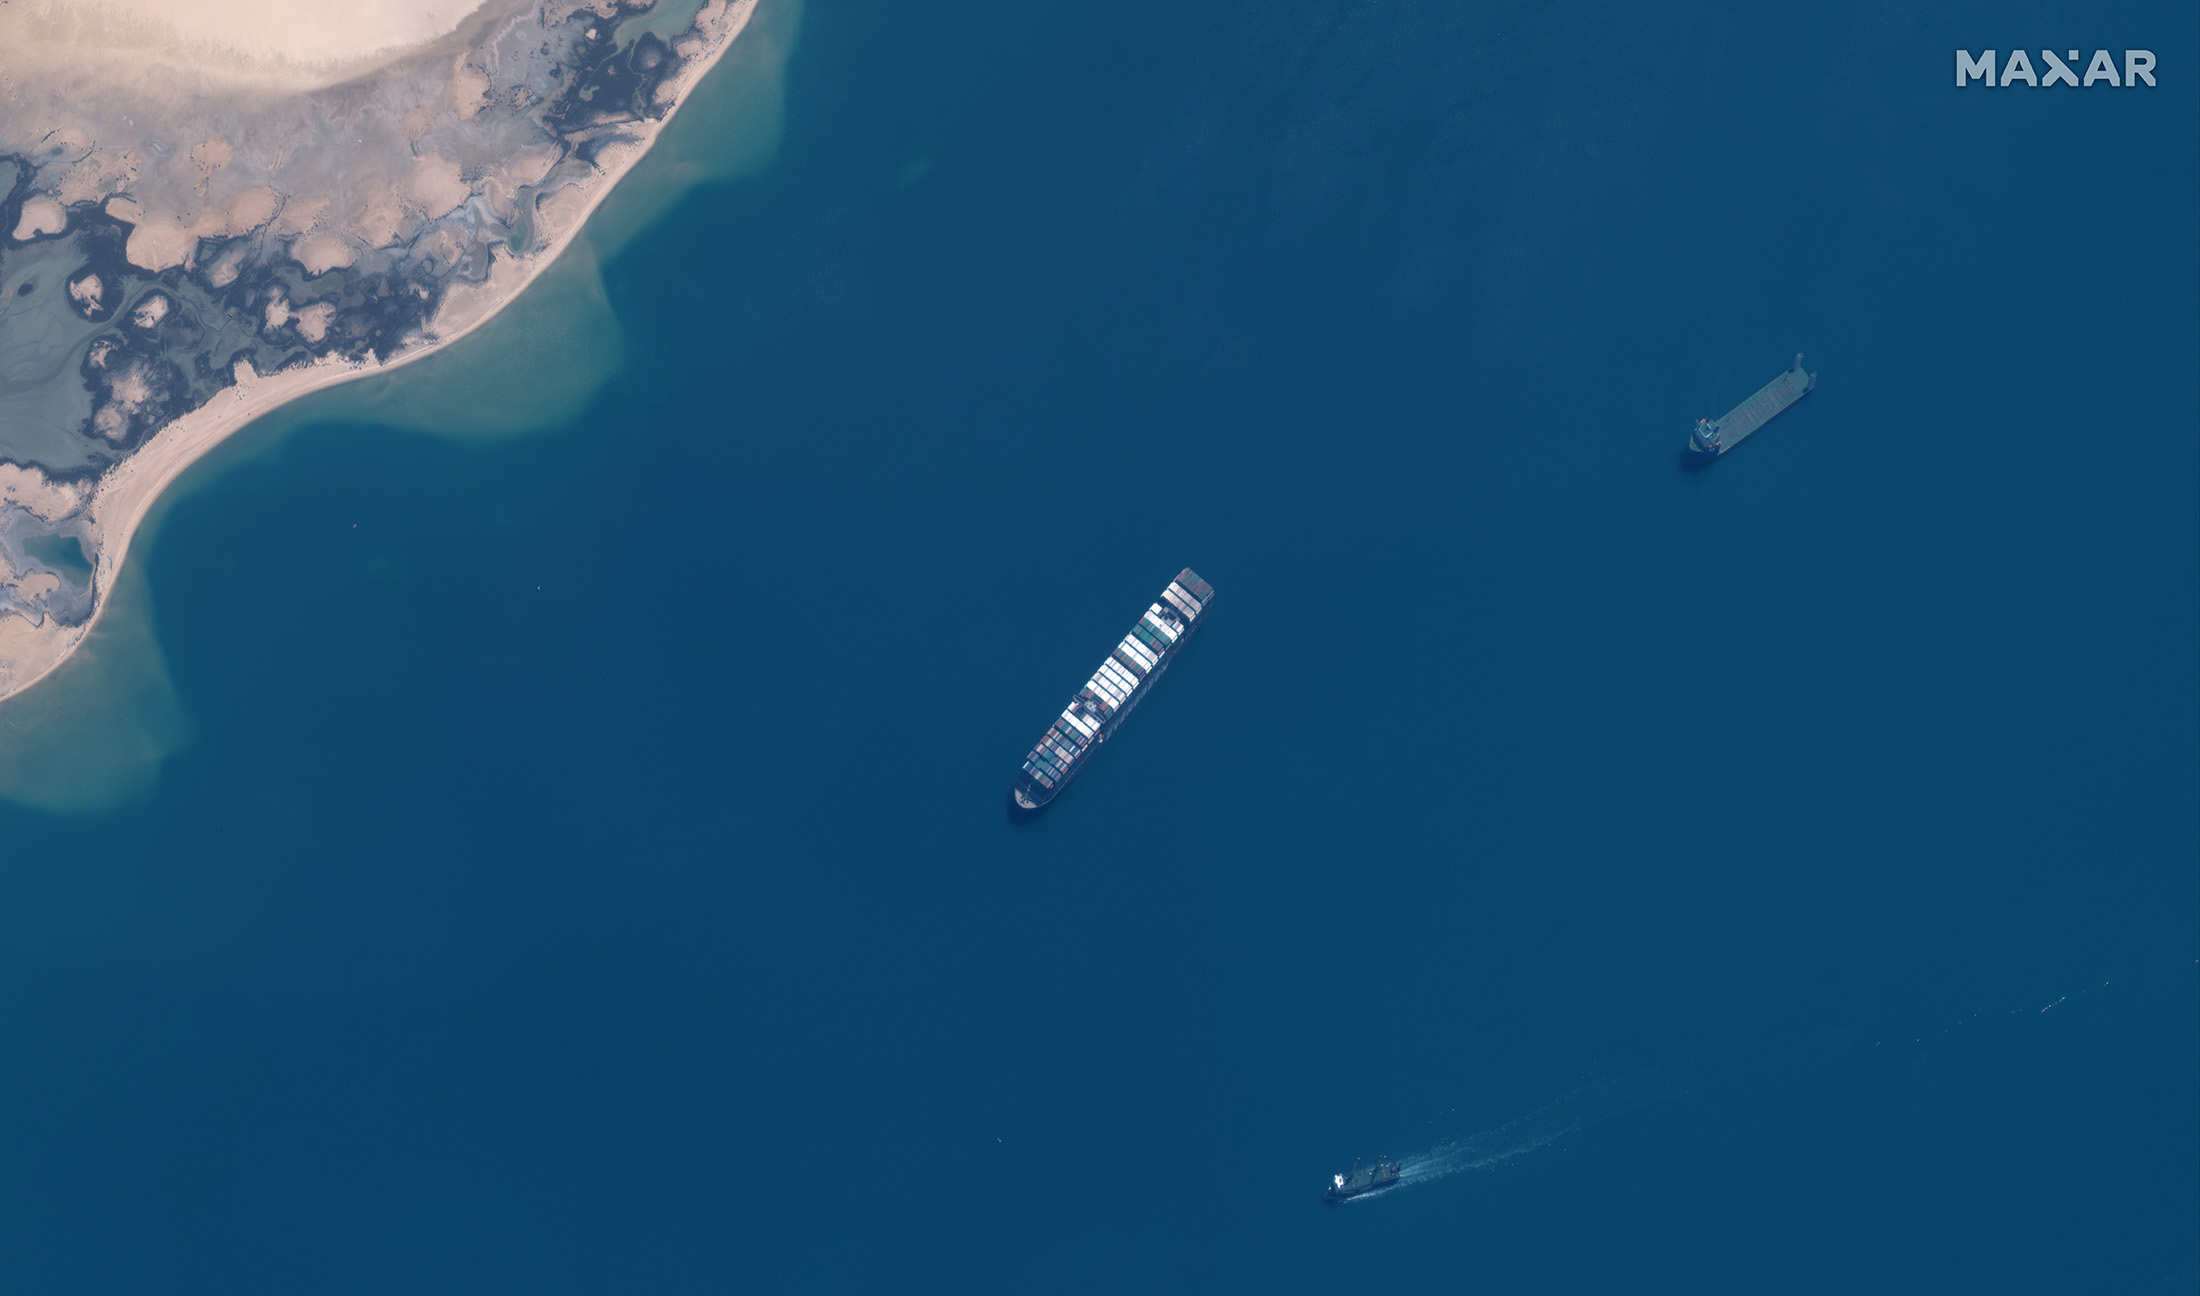 relates to Egypt Seizes Suez Ship ‘Ever Given’ Pending $900 Million Compensation